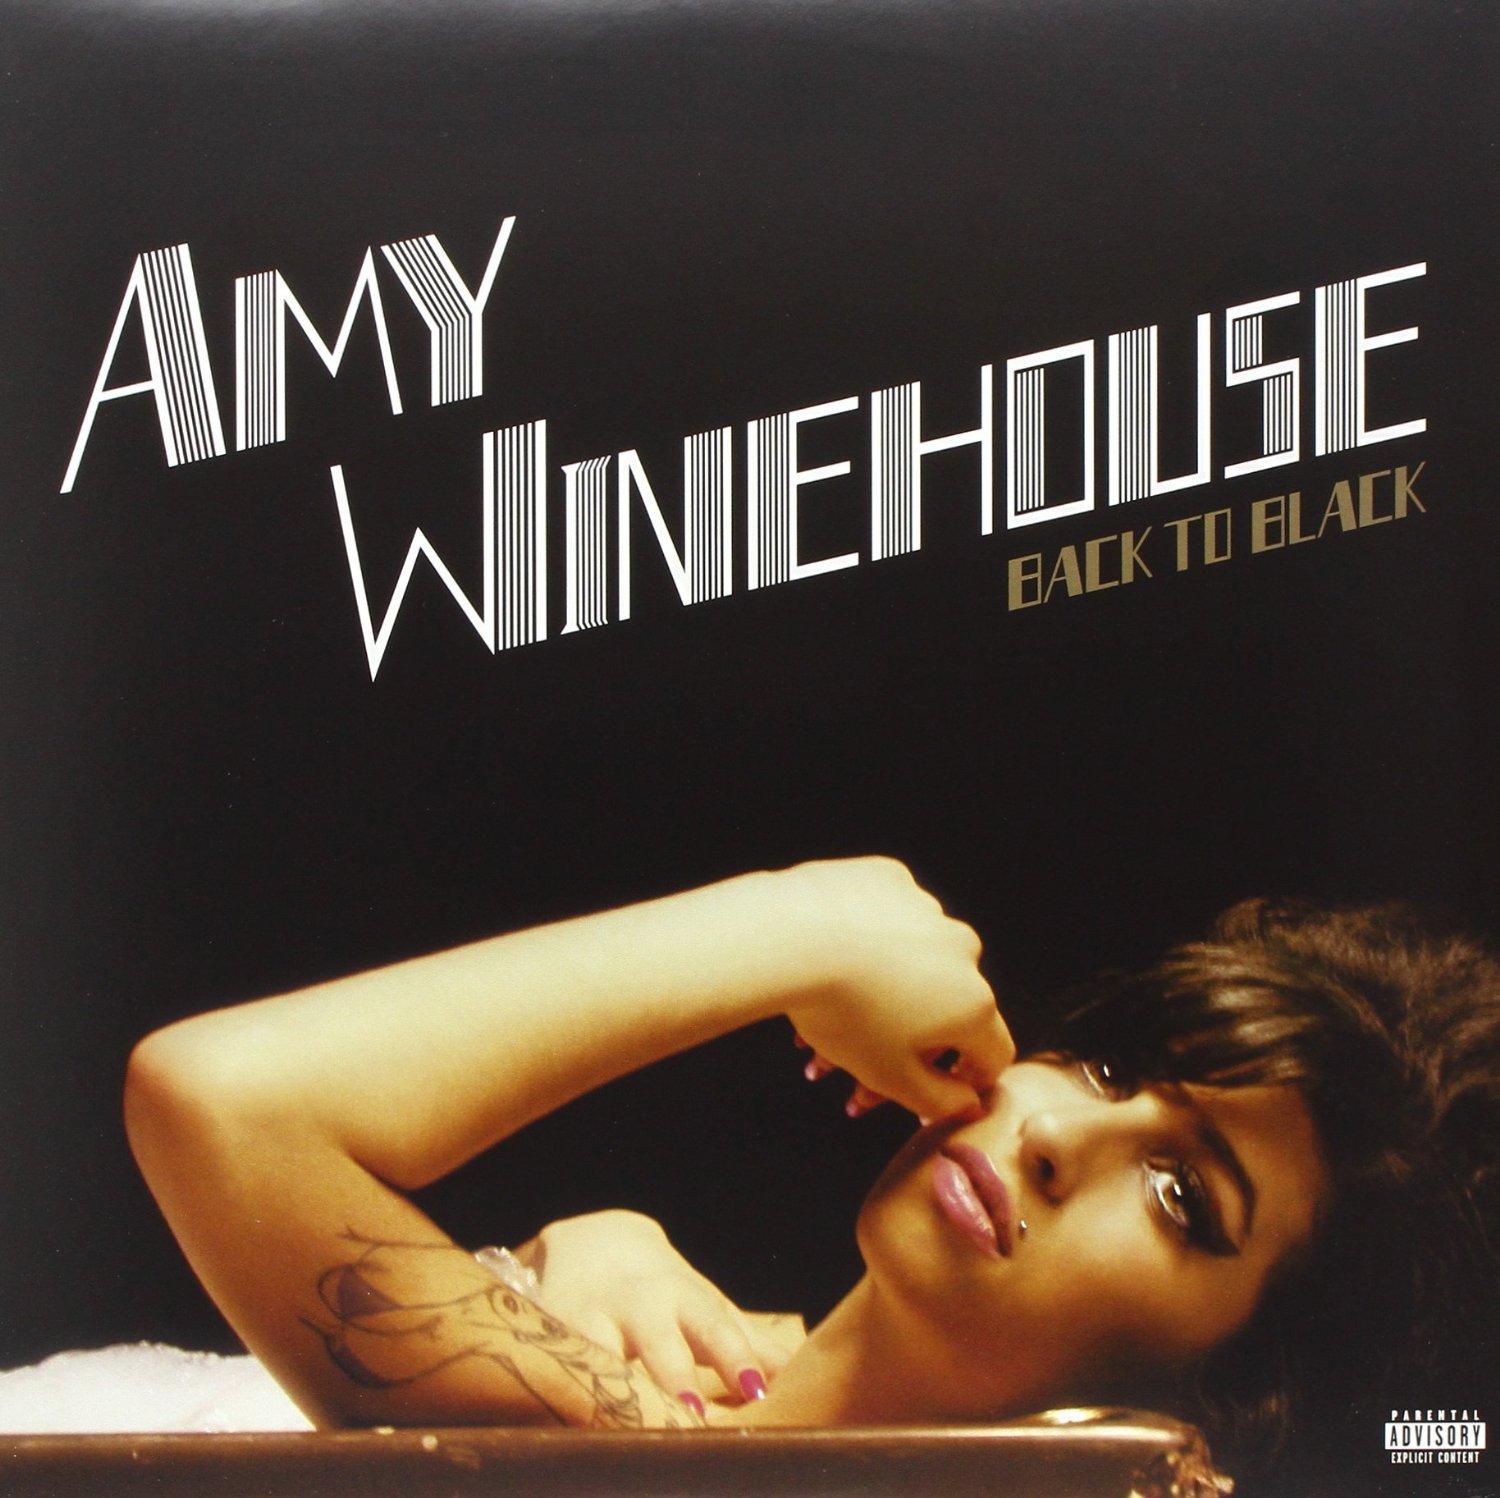 Amy Winehouse - Back to Black - R&B / Soul - Vinyl - image 2 of 2